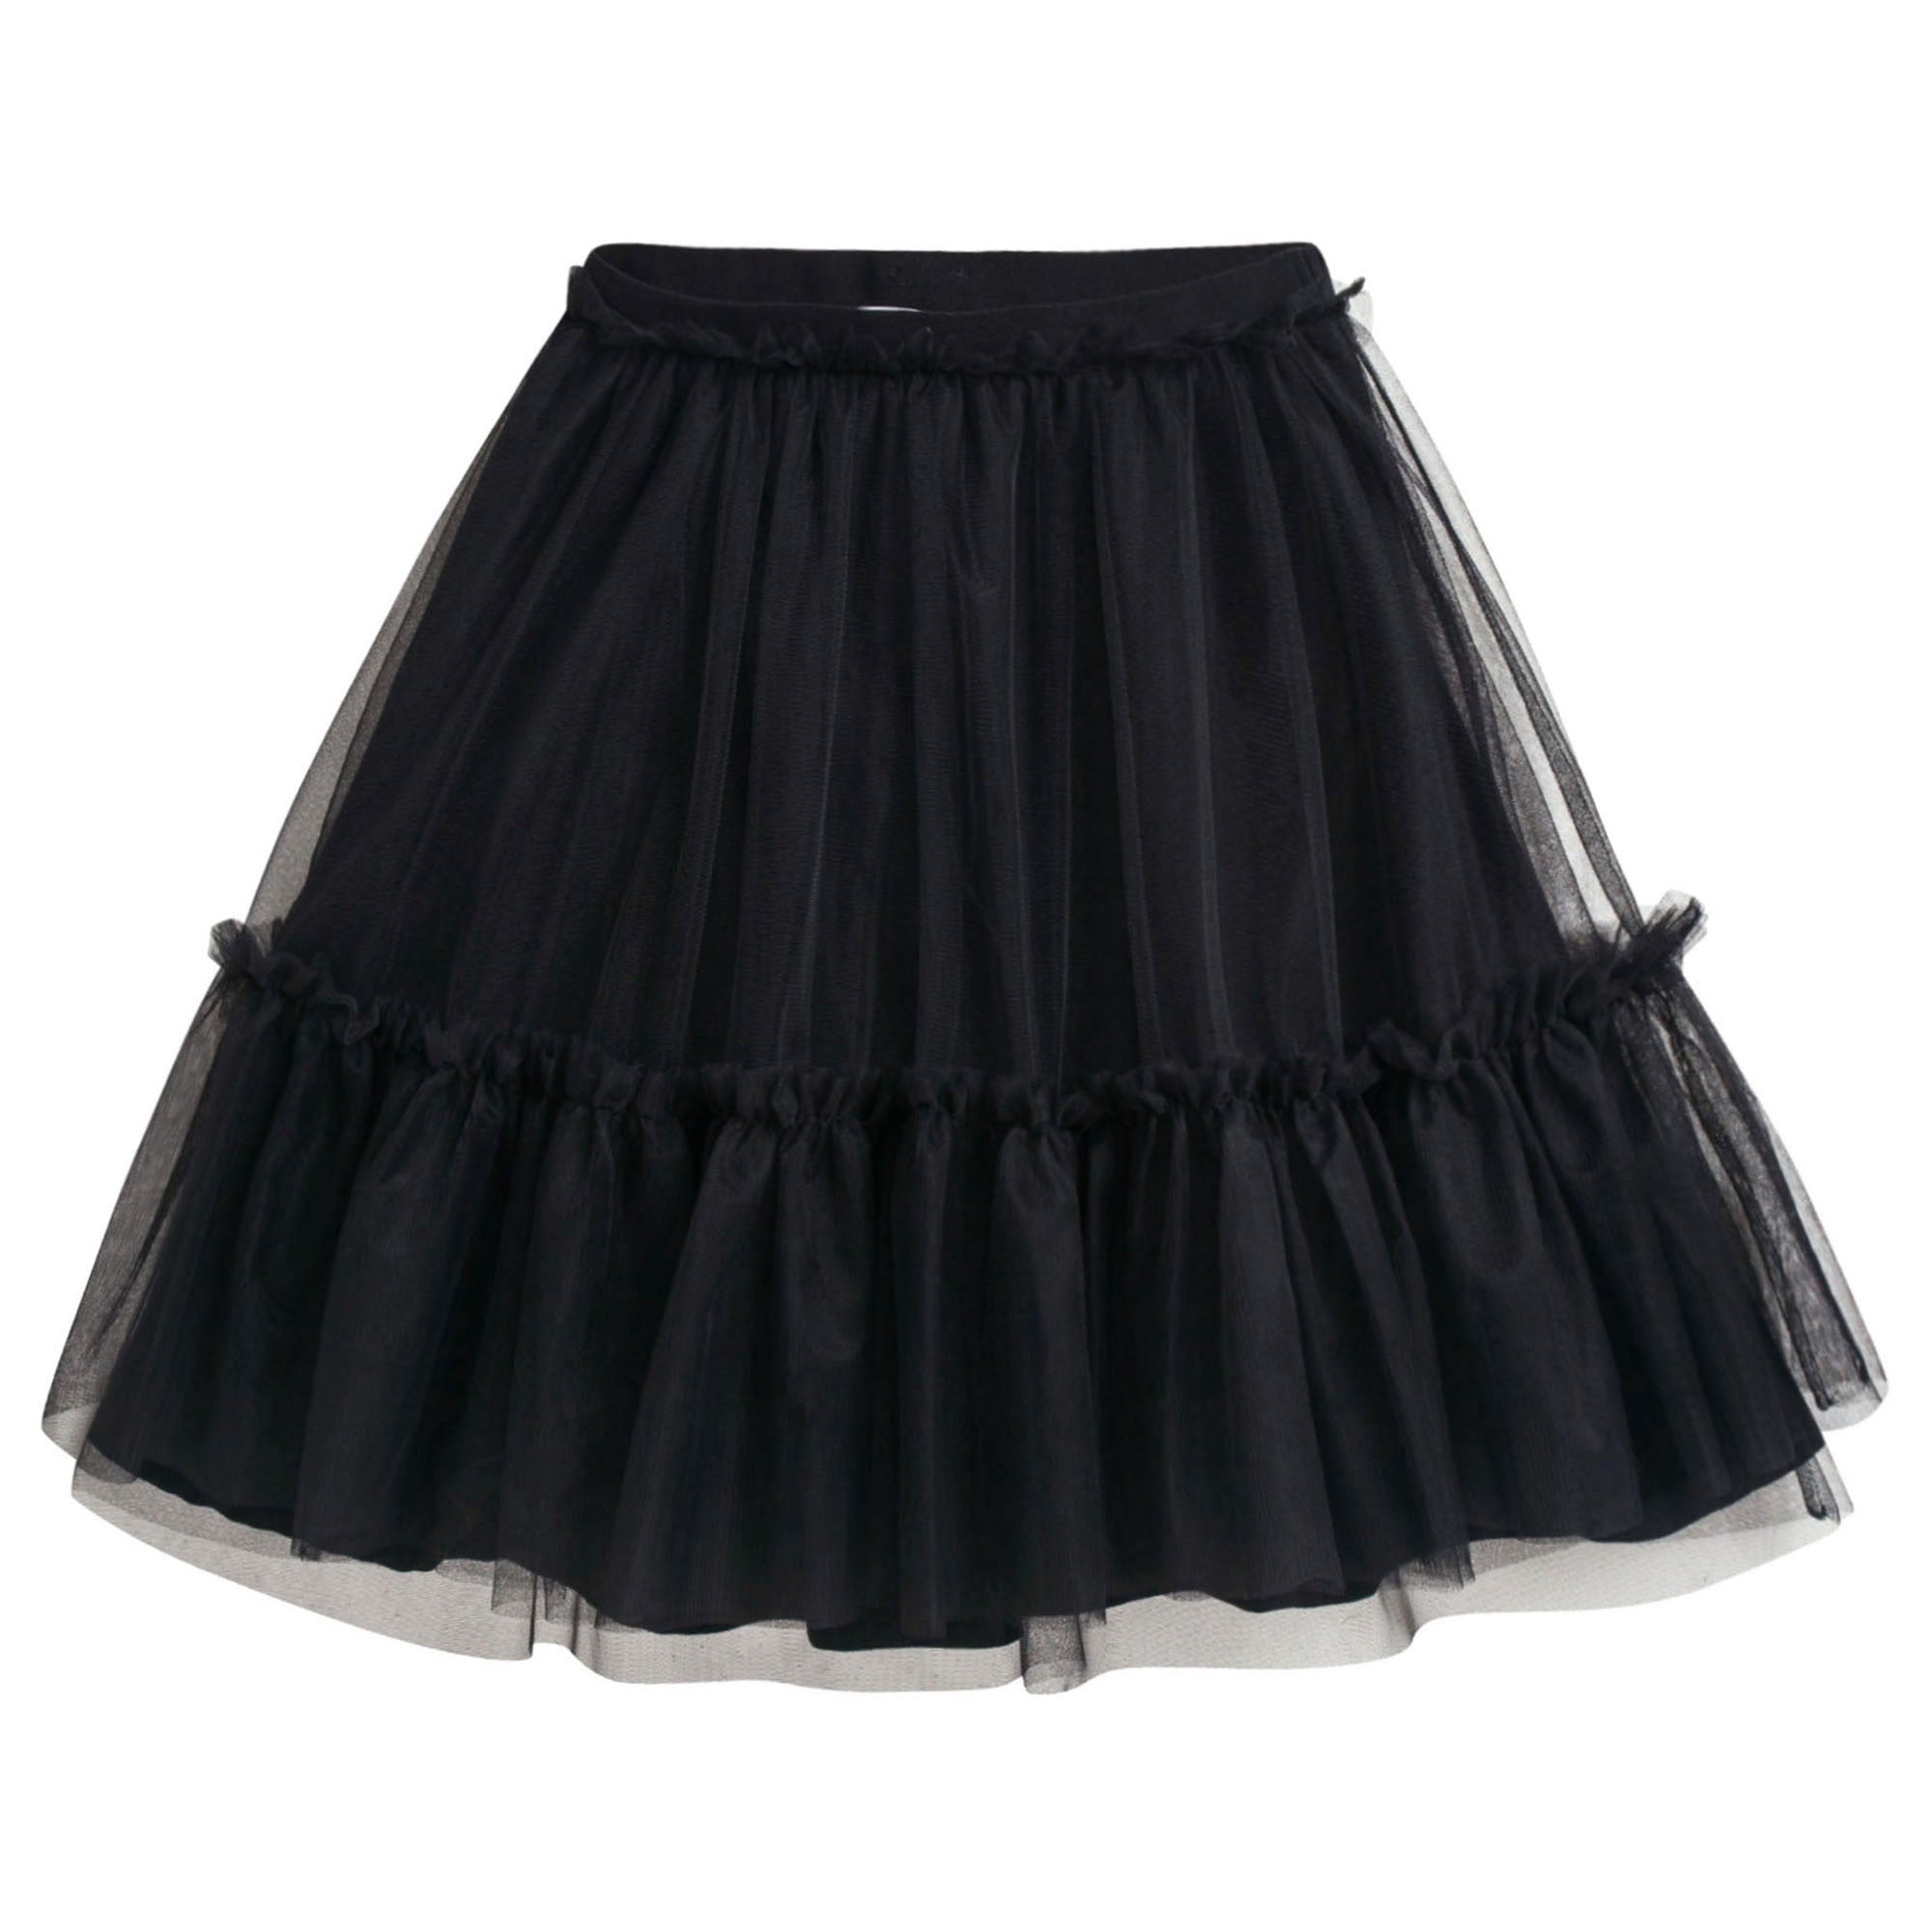 Girls Black Skirt With Tulle